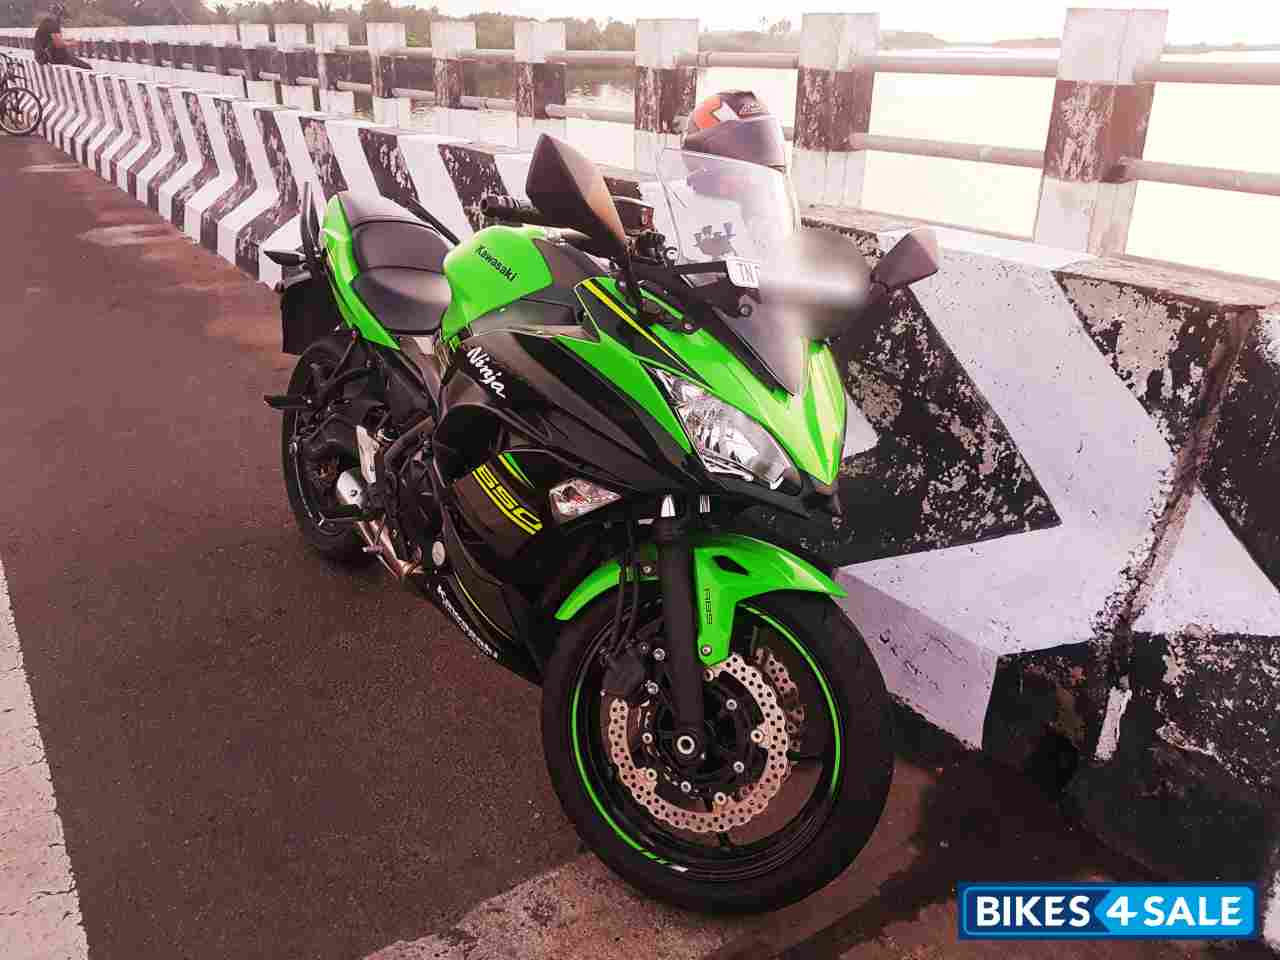 Used 2018 Kawasaki Ninja 650R sale in Chennai. ID 237121. Krt Green colour - Bikes4Sale